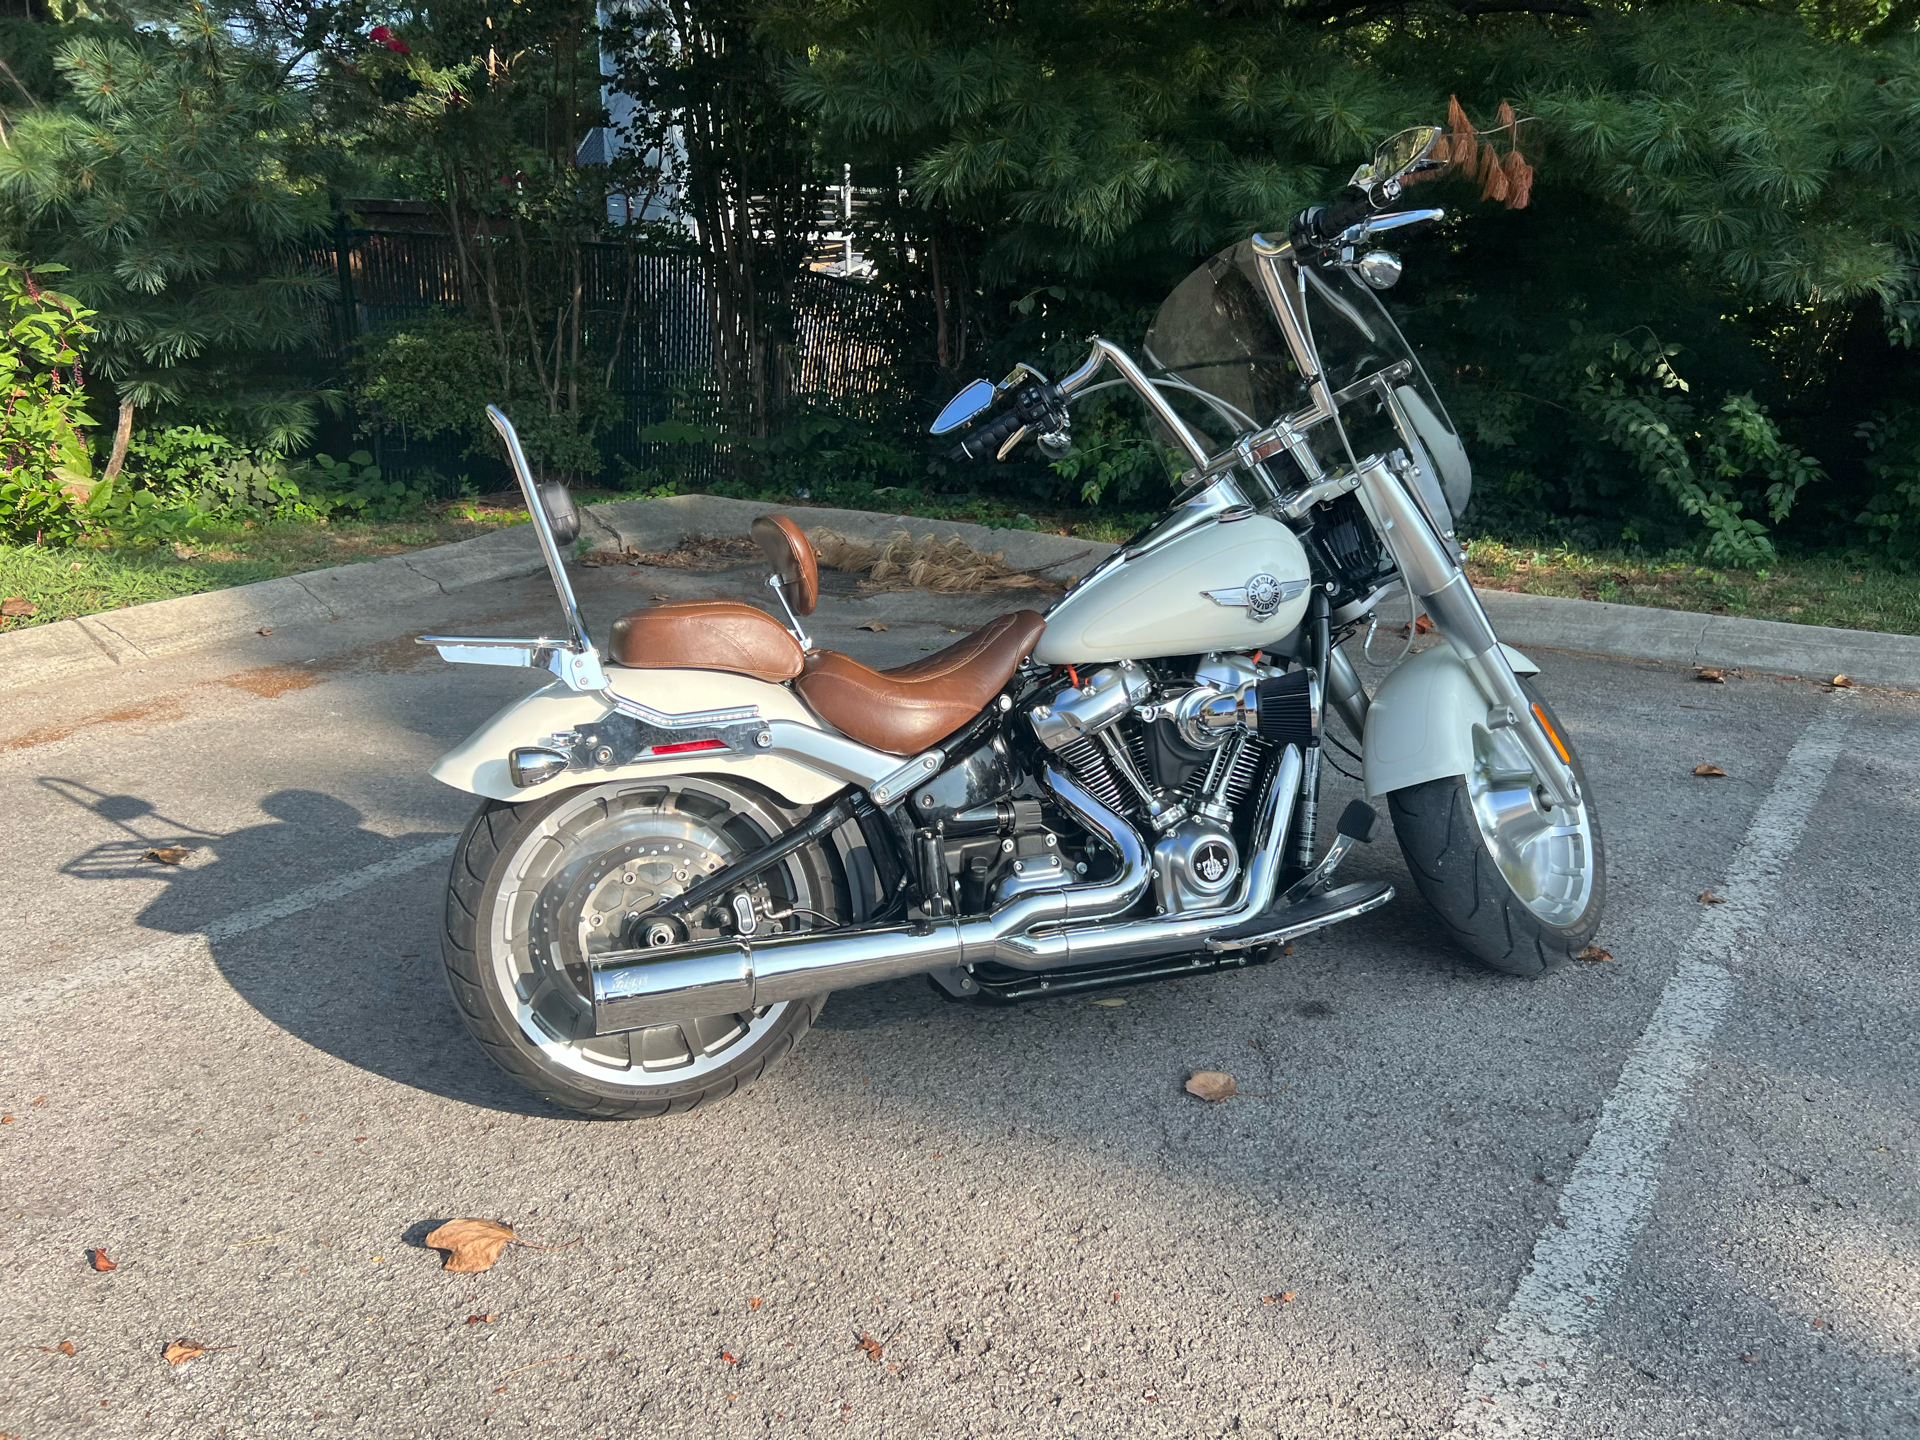 2018 Harley-Davidson Fat Boy® 114 in Franklin, Tennessee - Photo 9